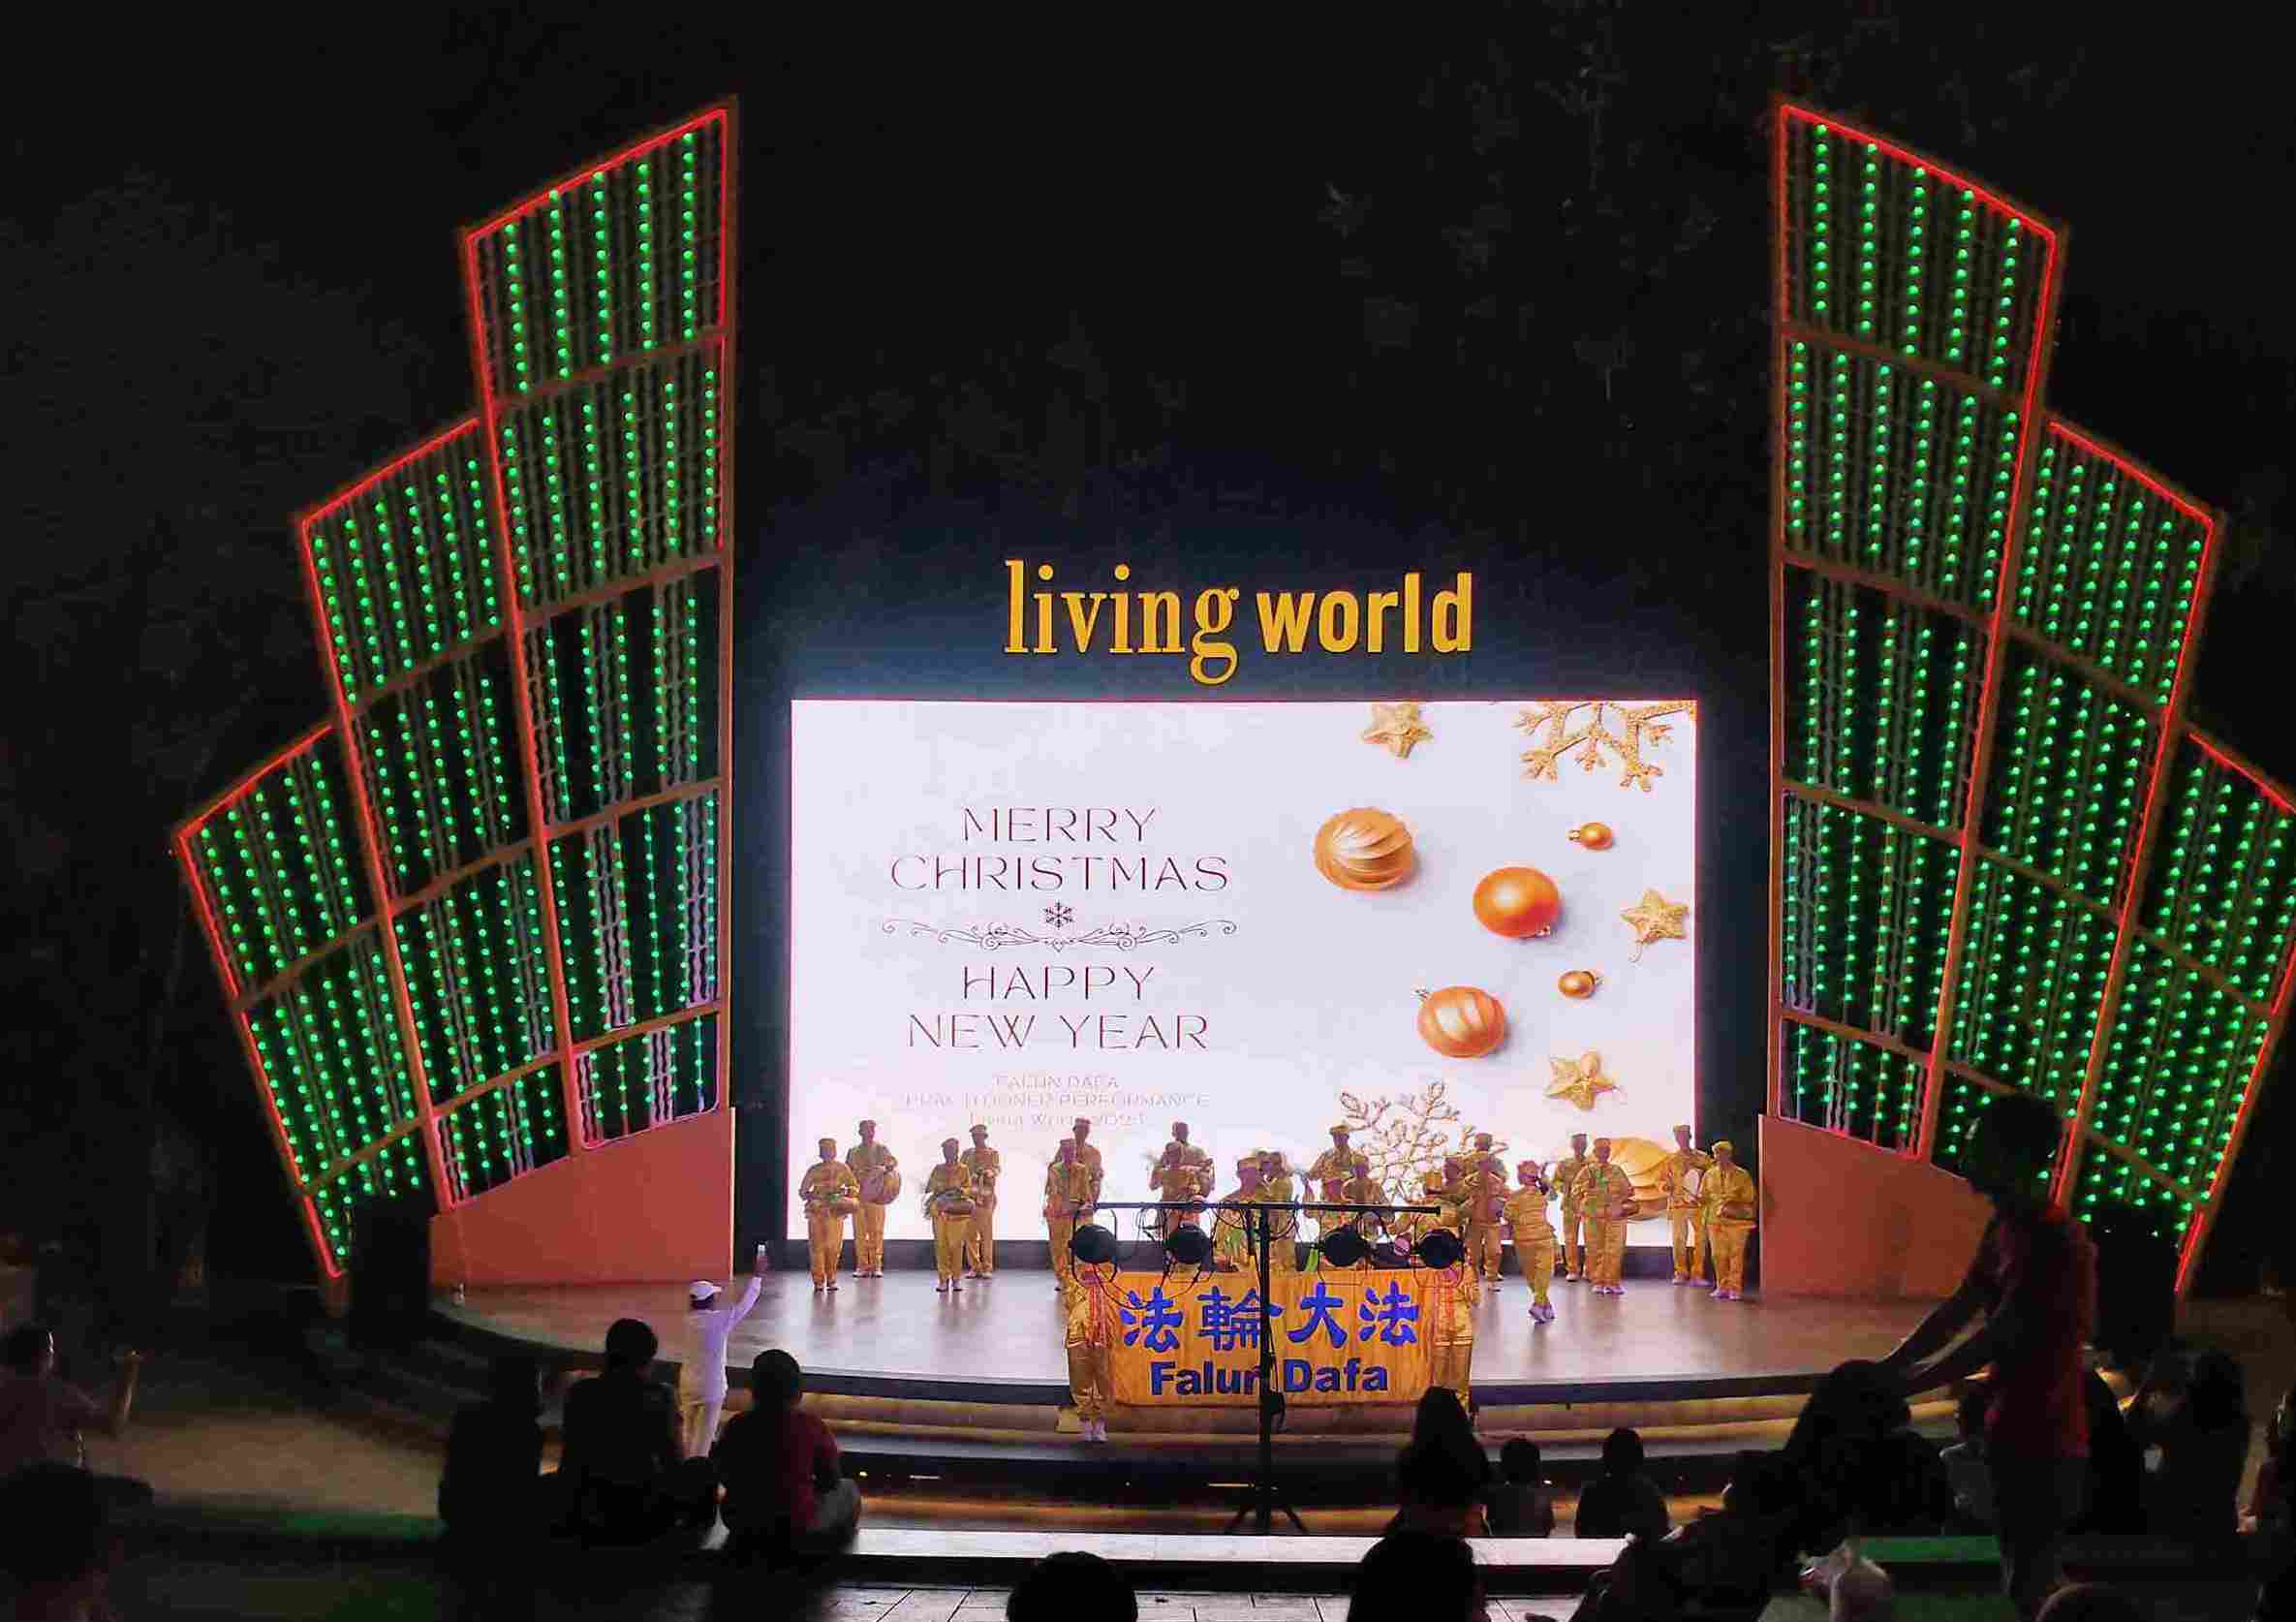 Image for article Bali, Indonesia: Practicantes presentan Falun Dafa en un teatro al aire libre